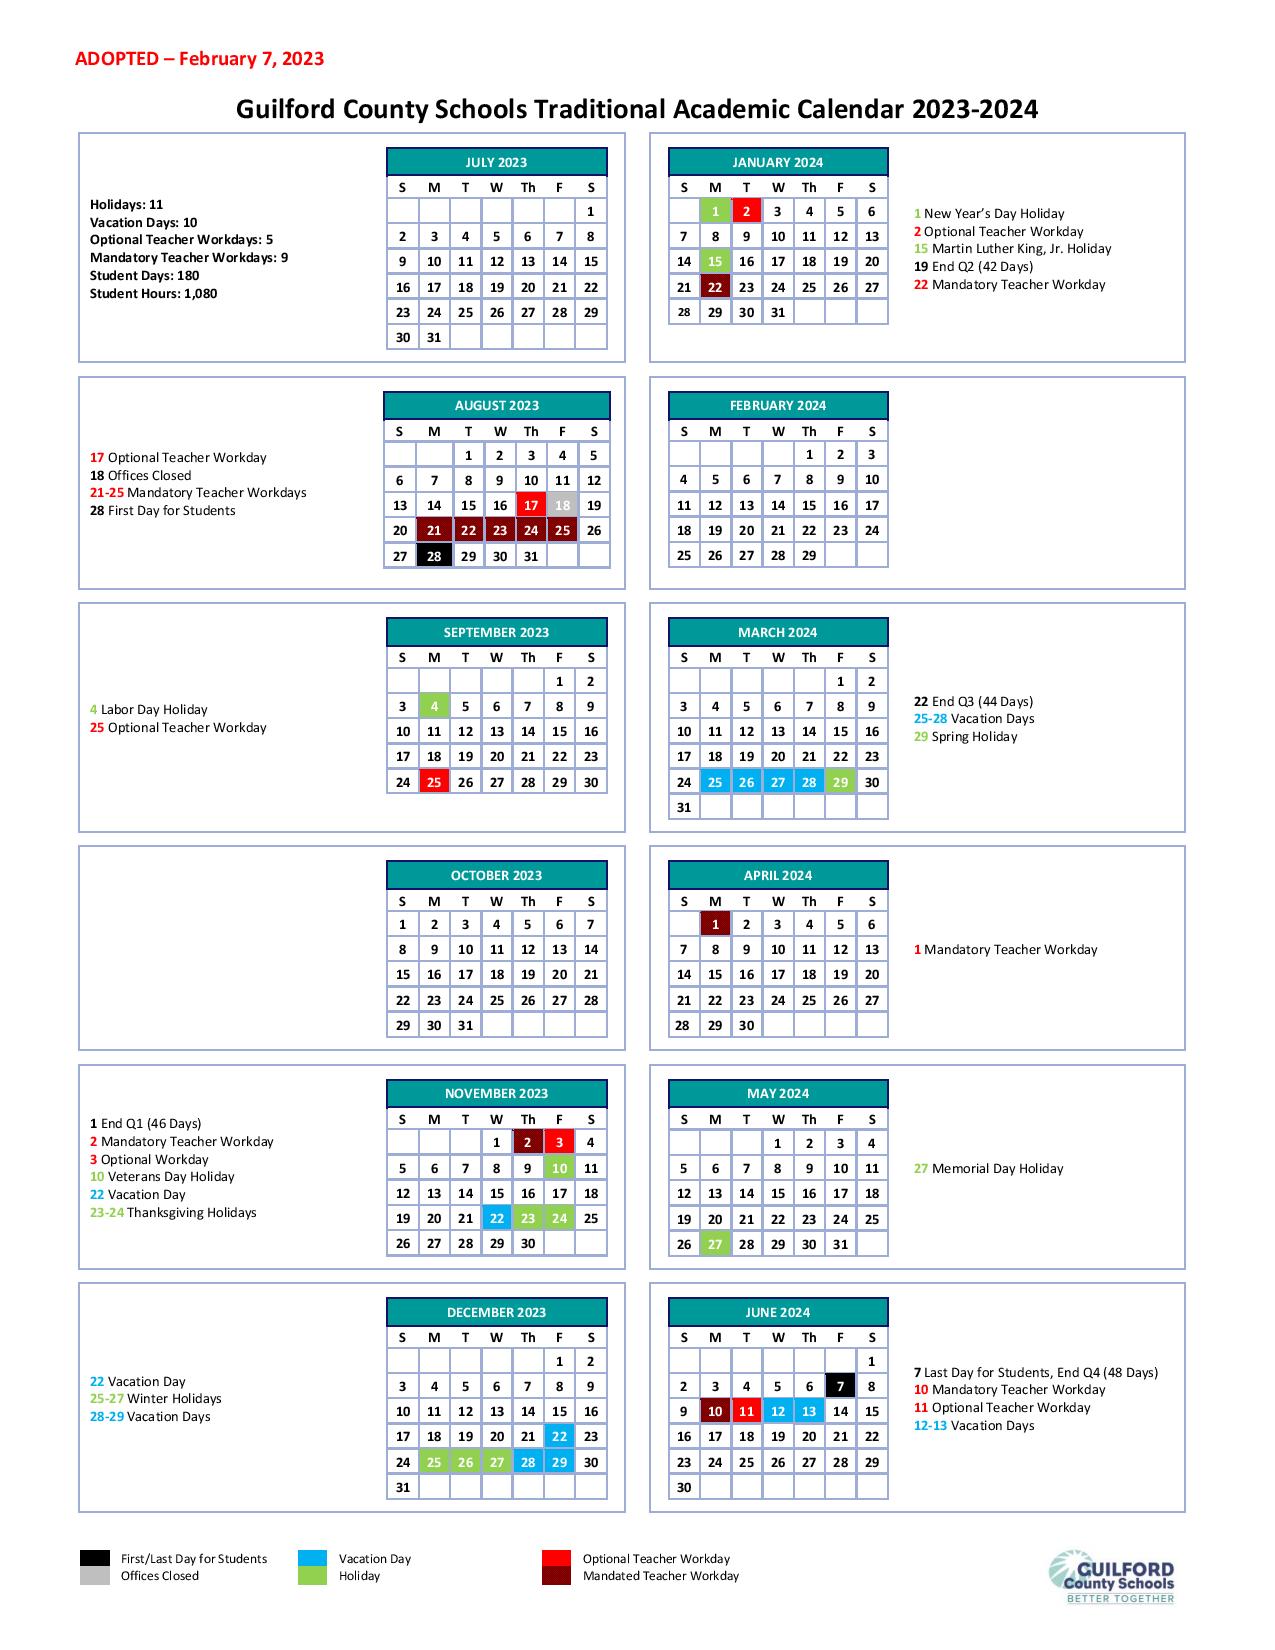 Guilford County Schools Calendar Holidays 2023 2024 PDF